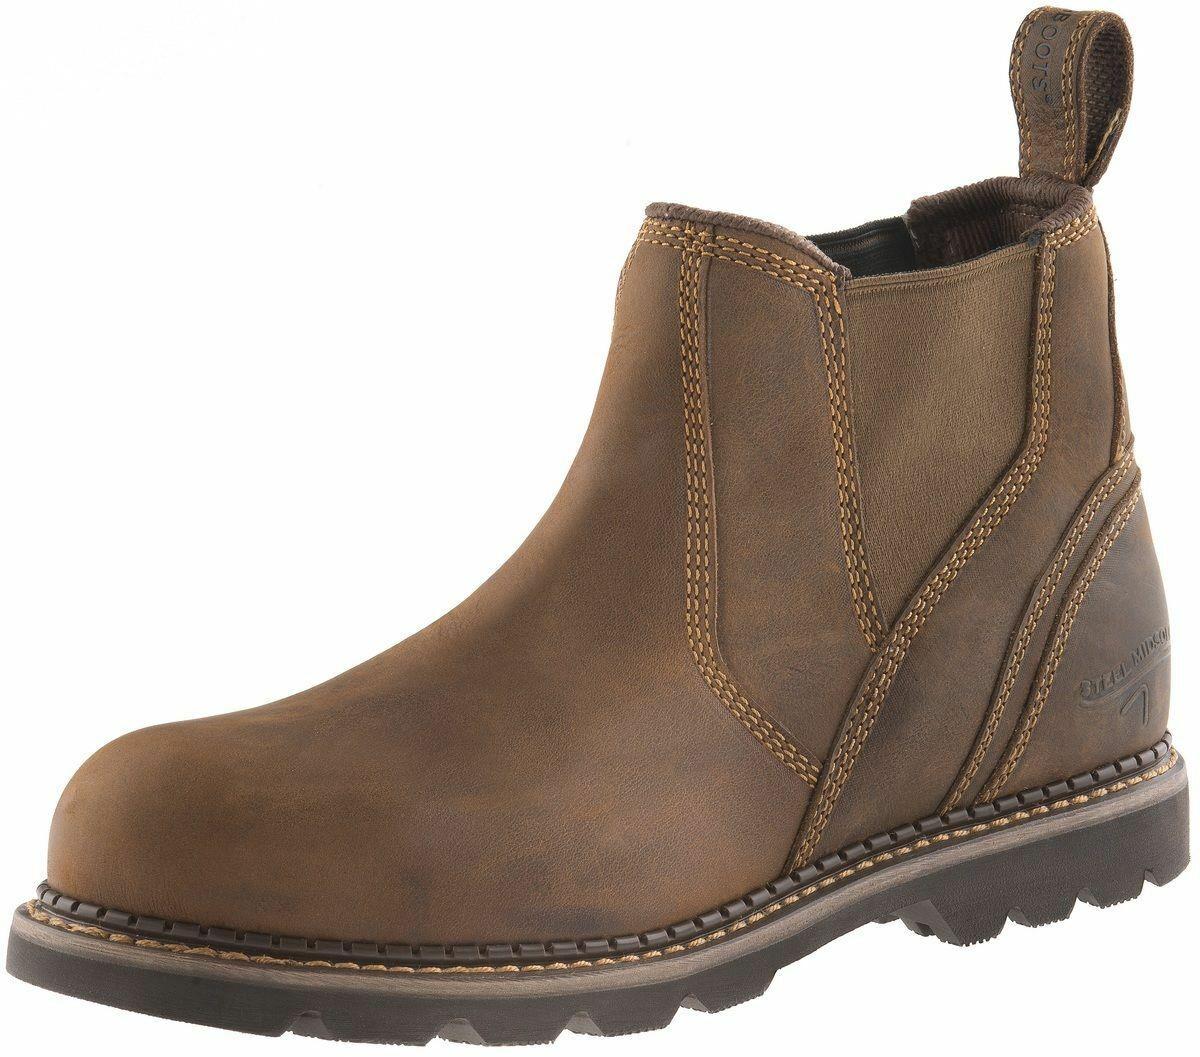 Buckbootz SBP brown waxy leather steel toe/midsole safety dealer work boot #B1555SM